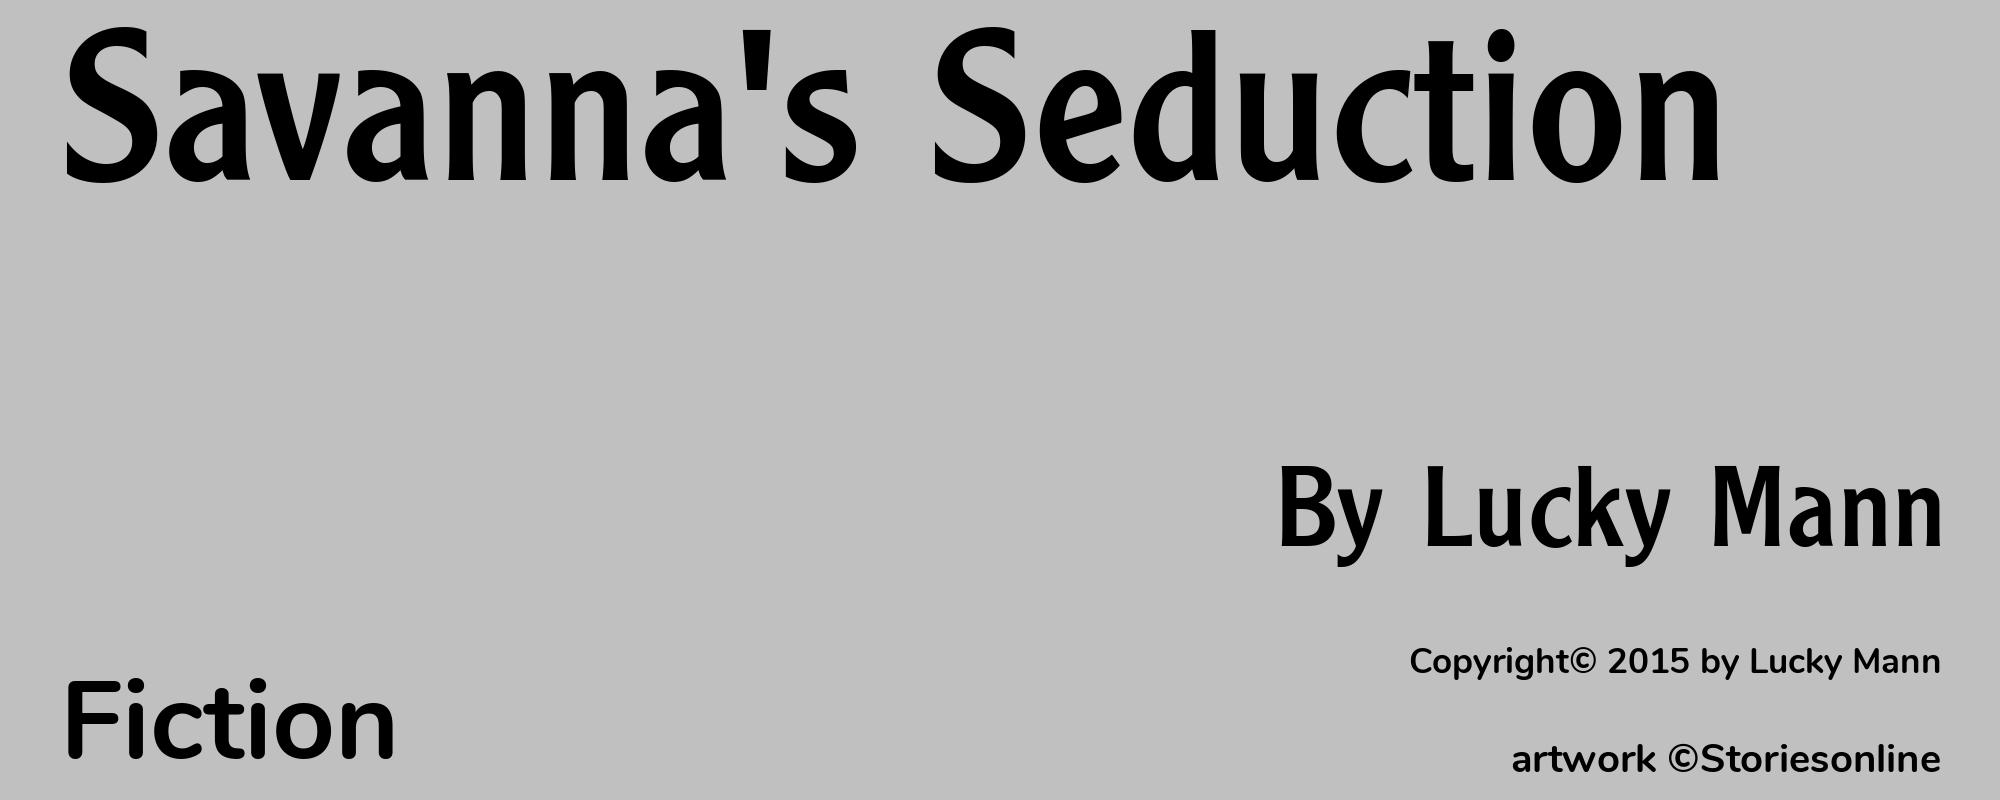 Savanna's Seduction - Cover